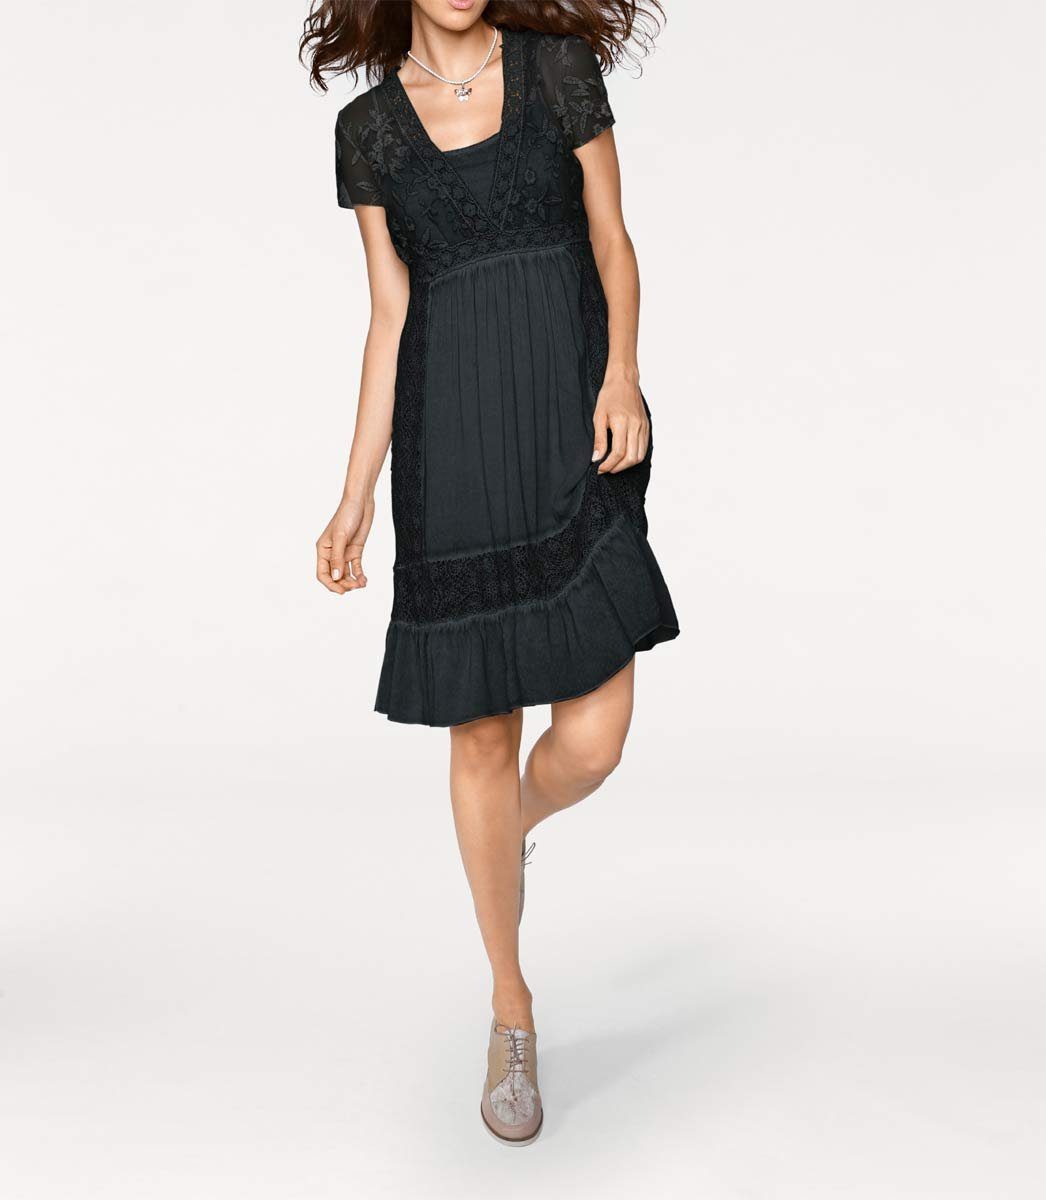 Damen heine schwarz Tesini Linea Designer-Spitzenkleid, Spitzenkleid